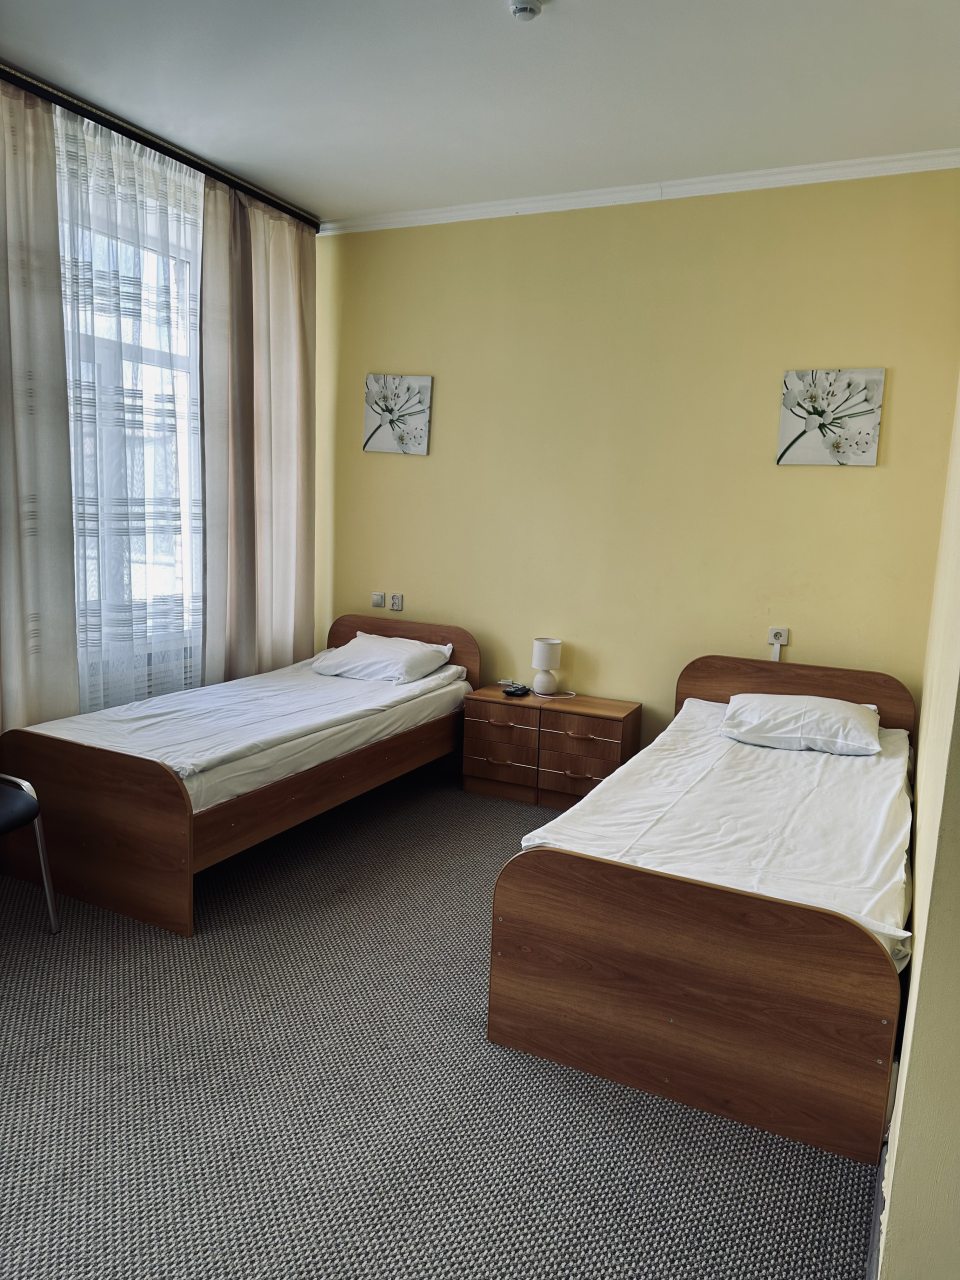 Трехместный (Стандарт) гостиницы 104 комнаты, Воронеж